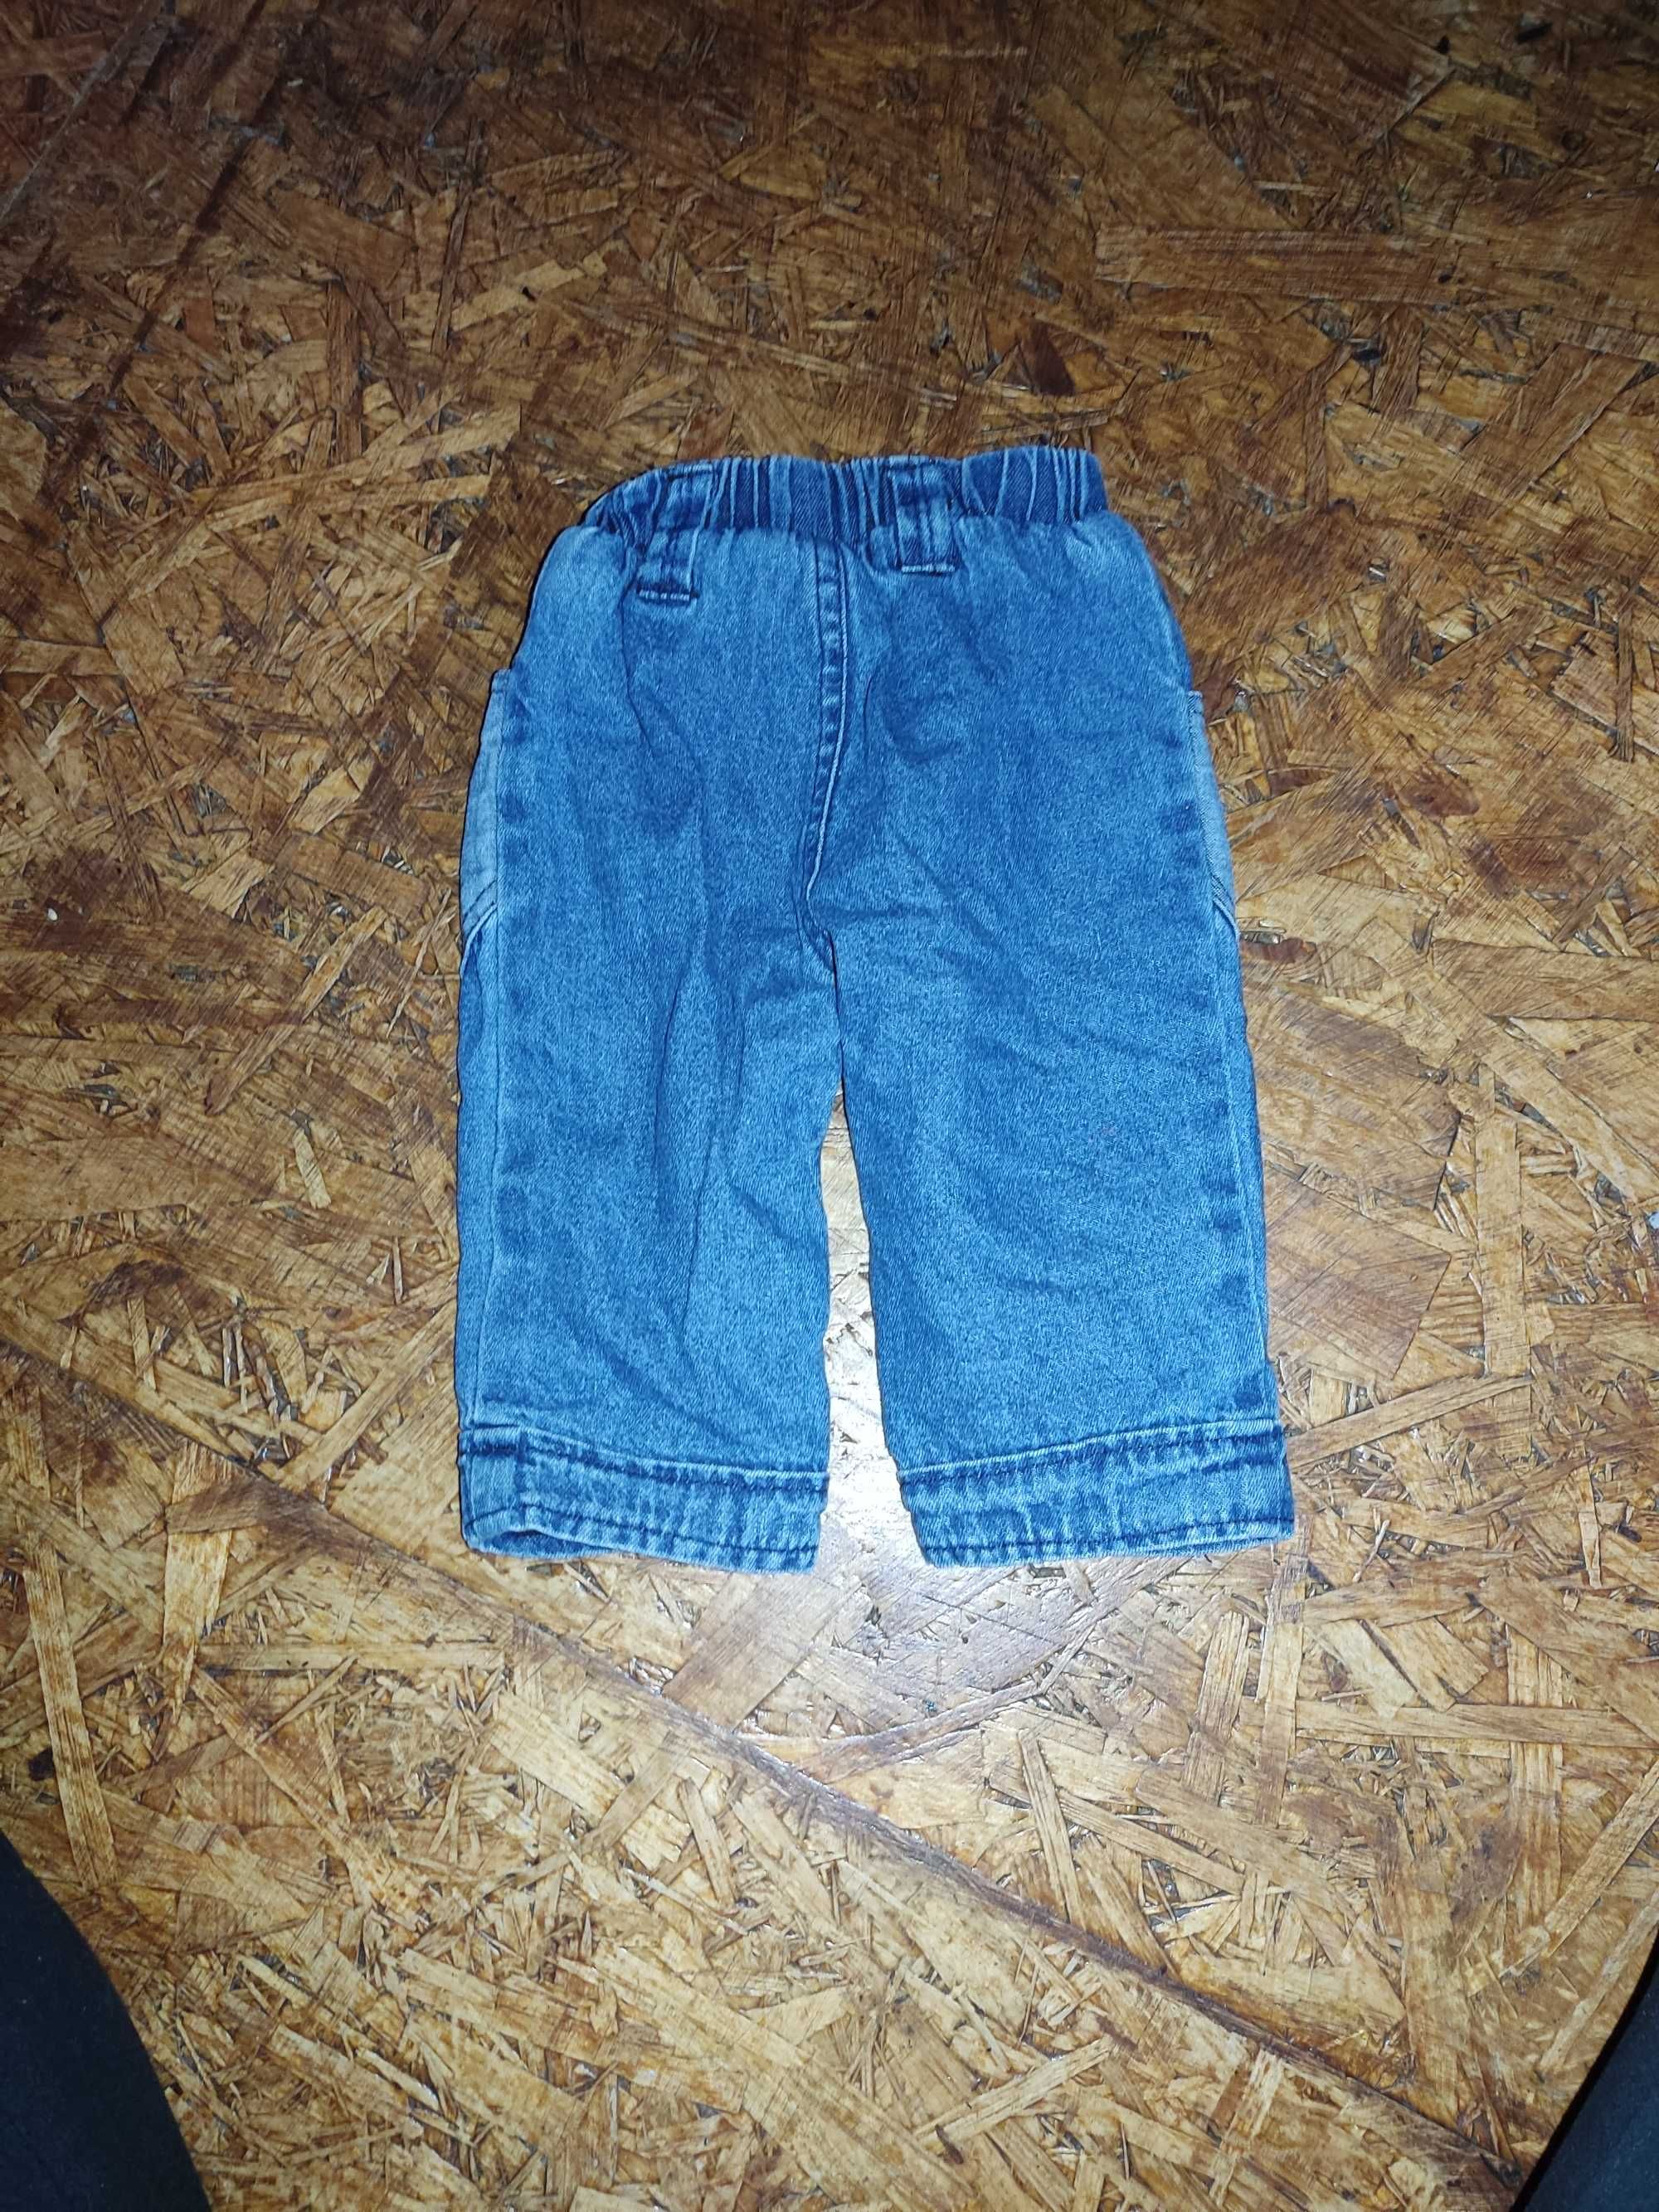 Spodnie ocieplane jeansy niemowlęce 68